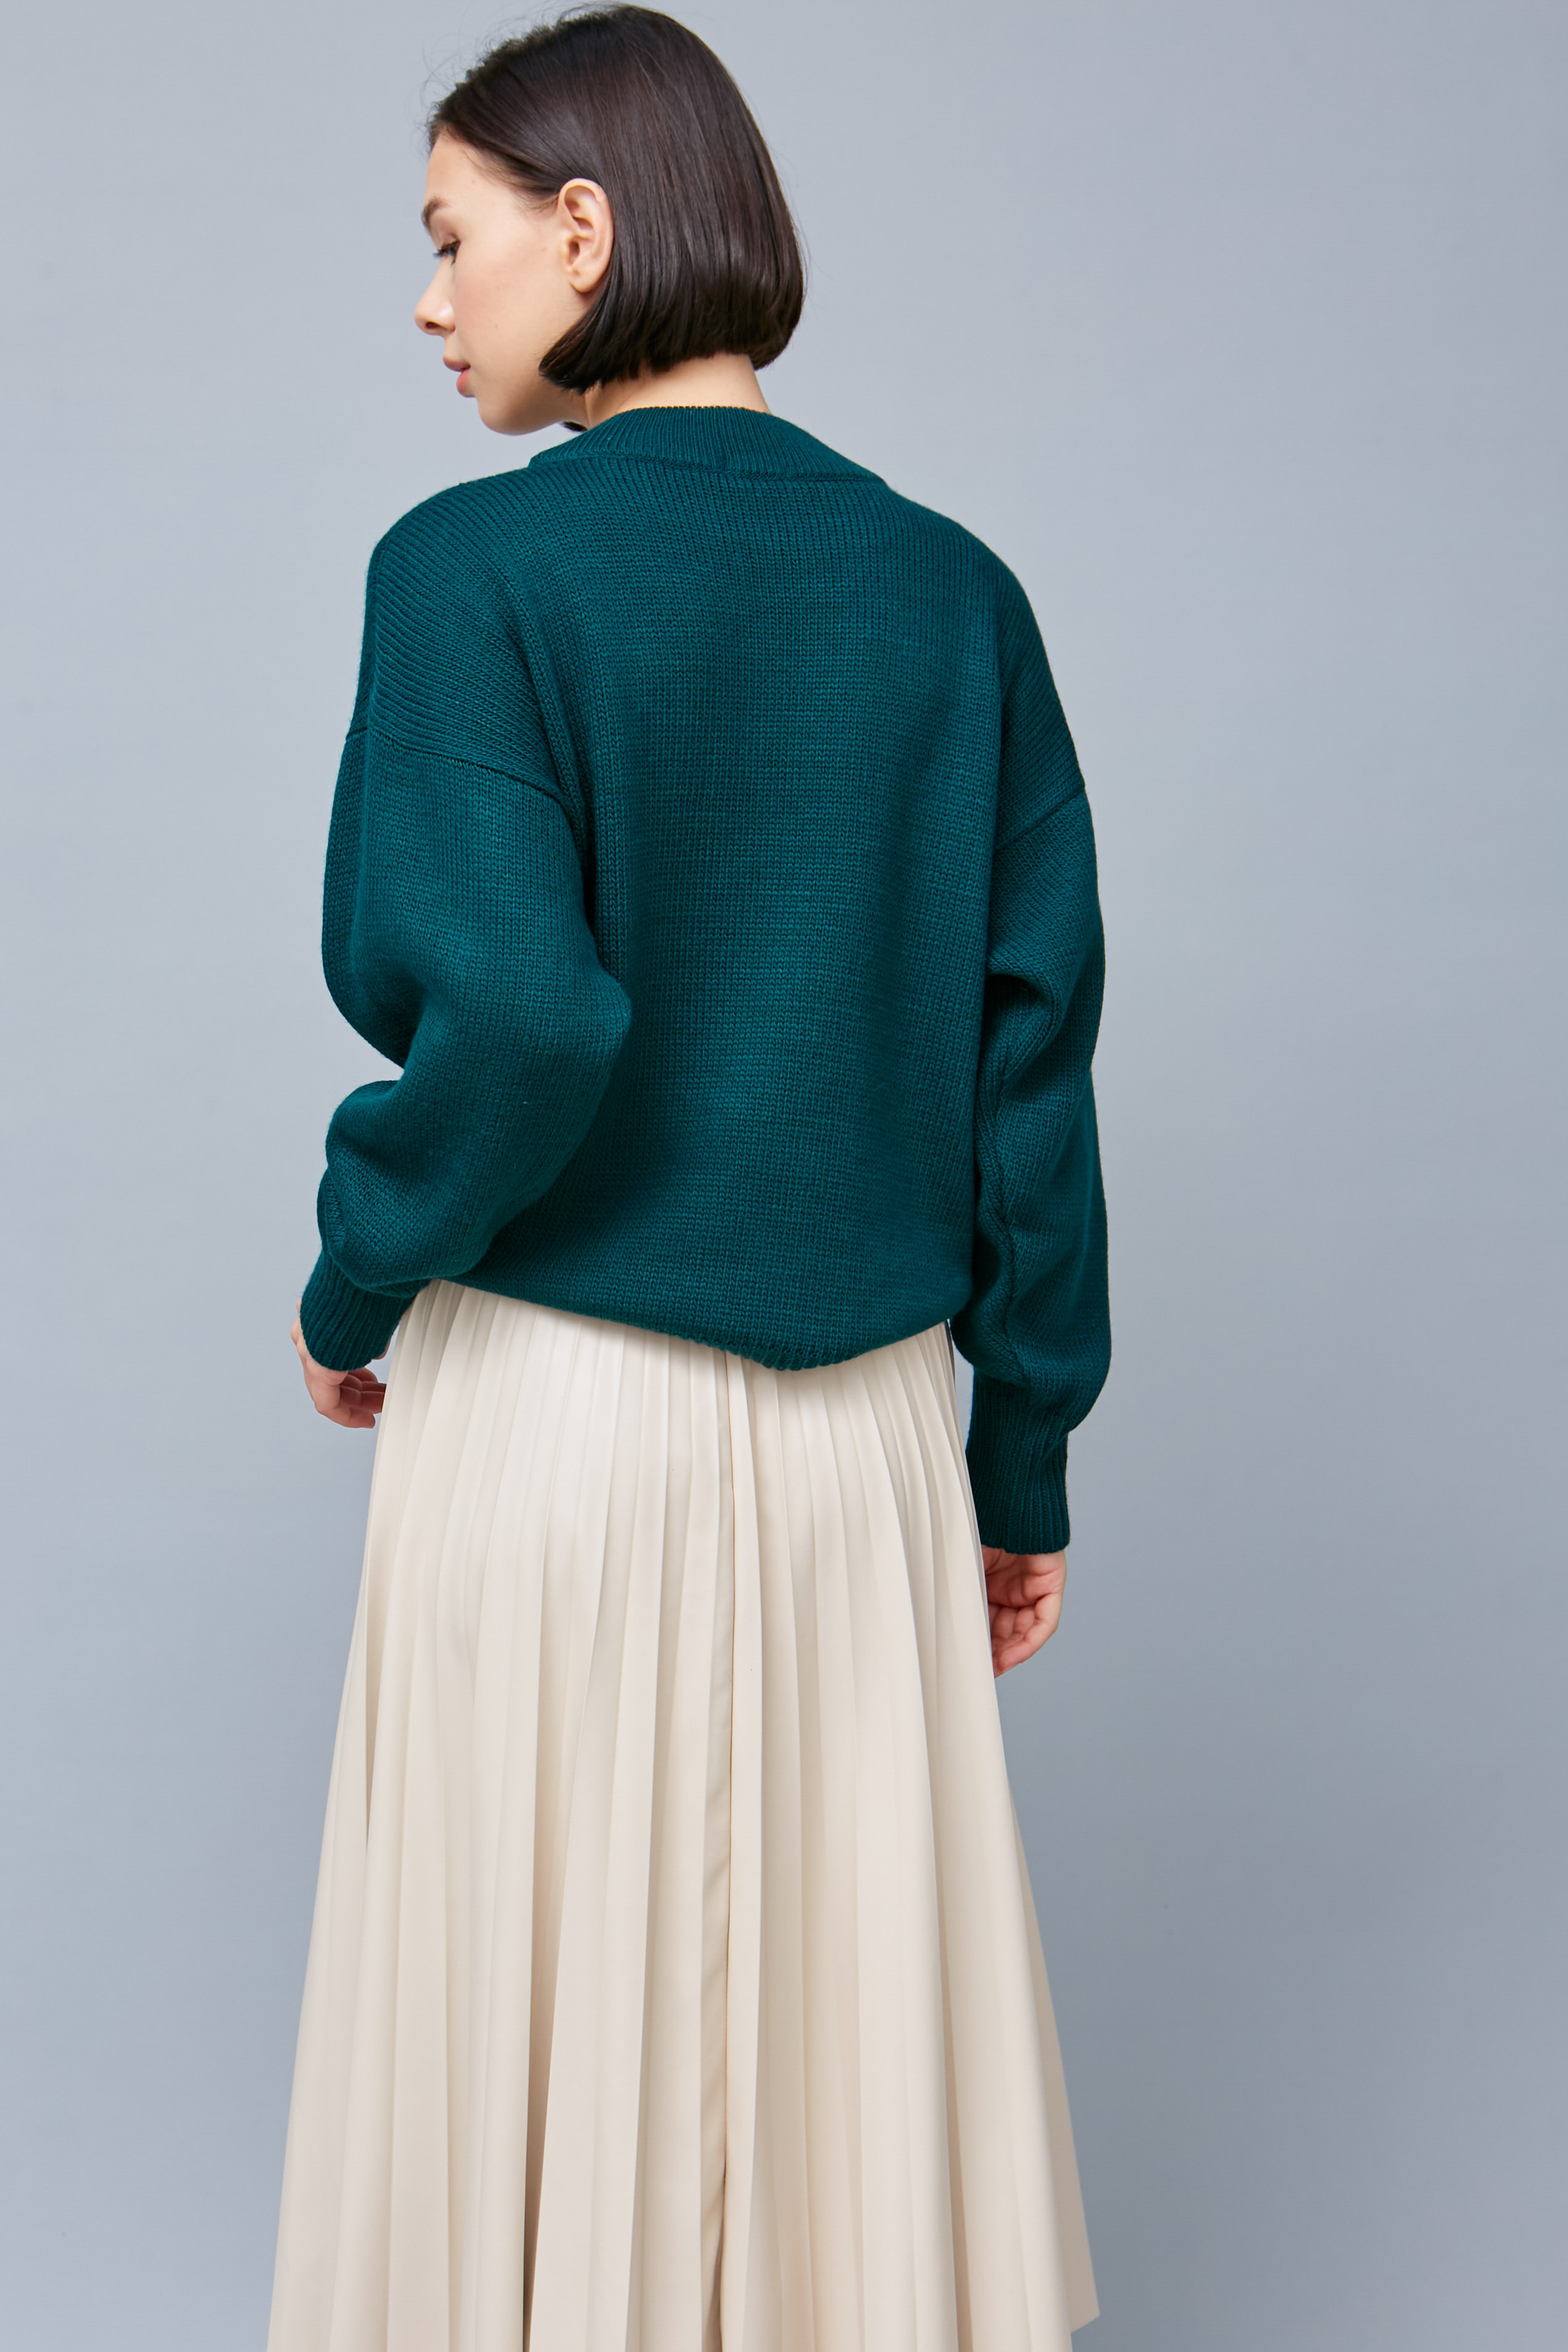 Green knit sweater, photo 3